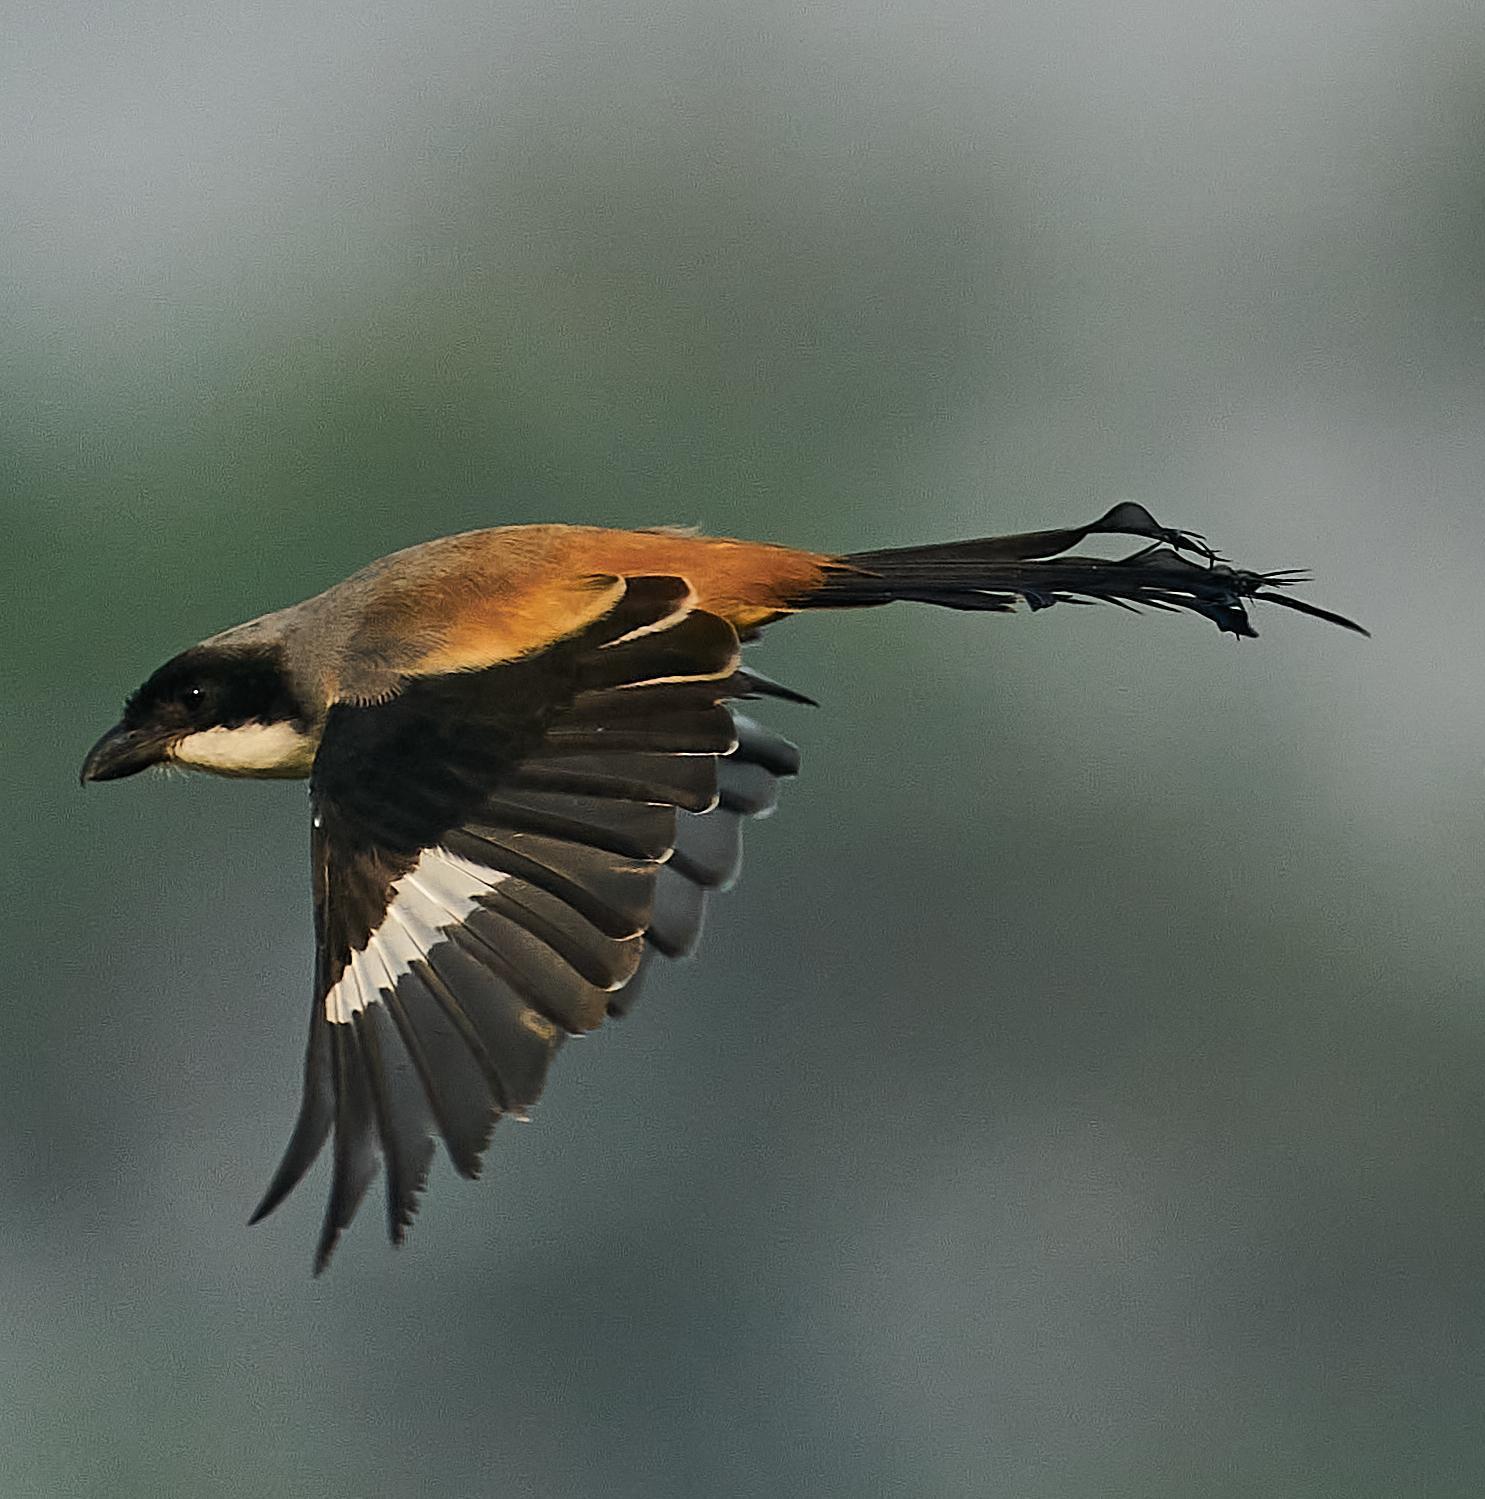 Long-tailed Shrike Photo by Steven Cheong